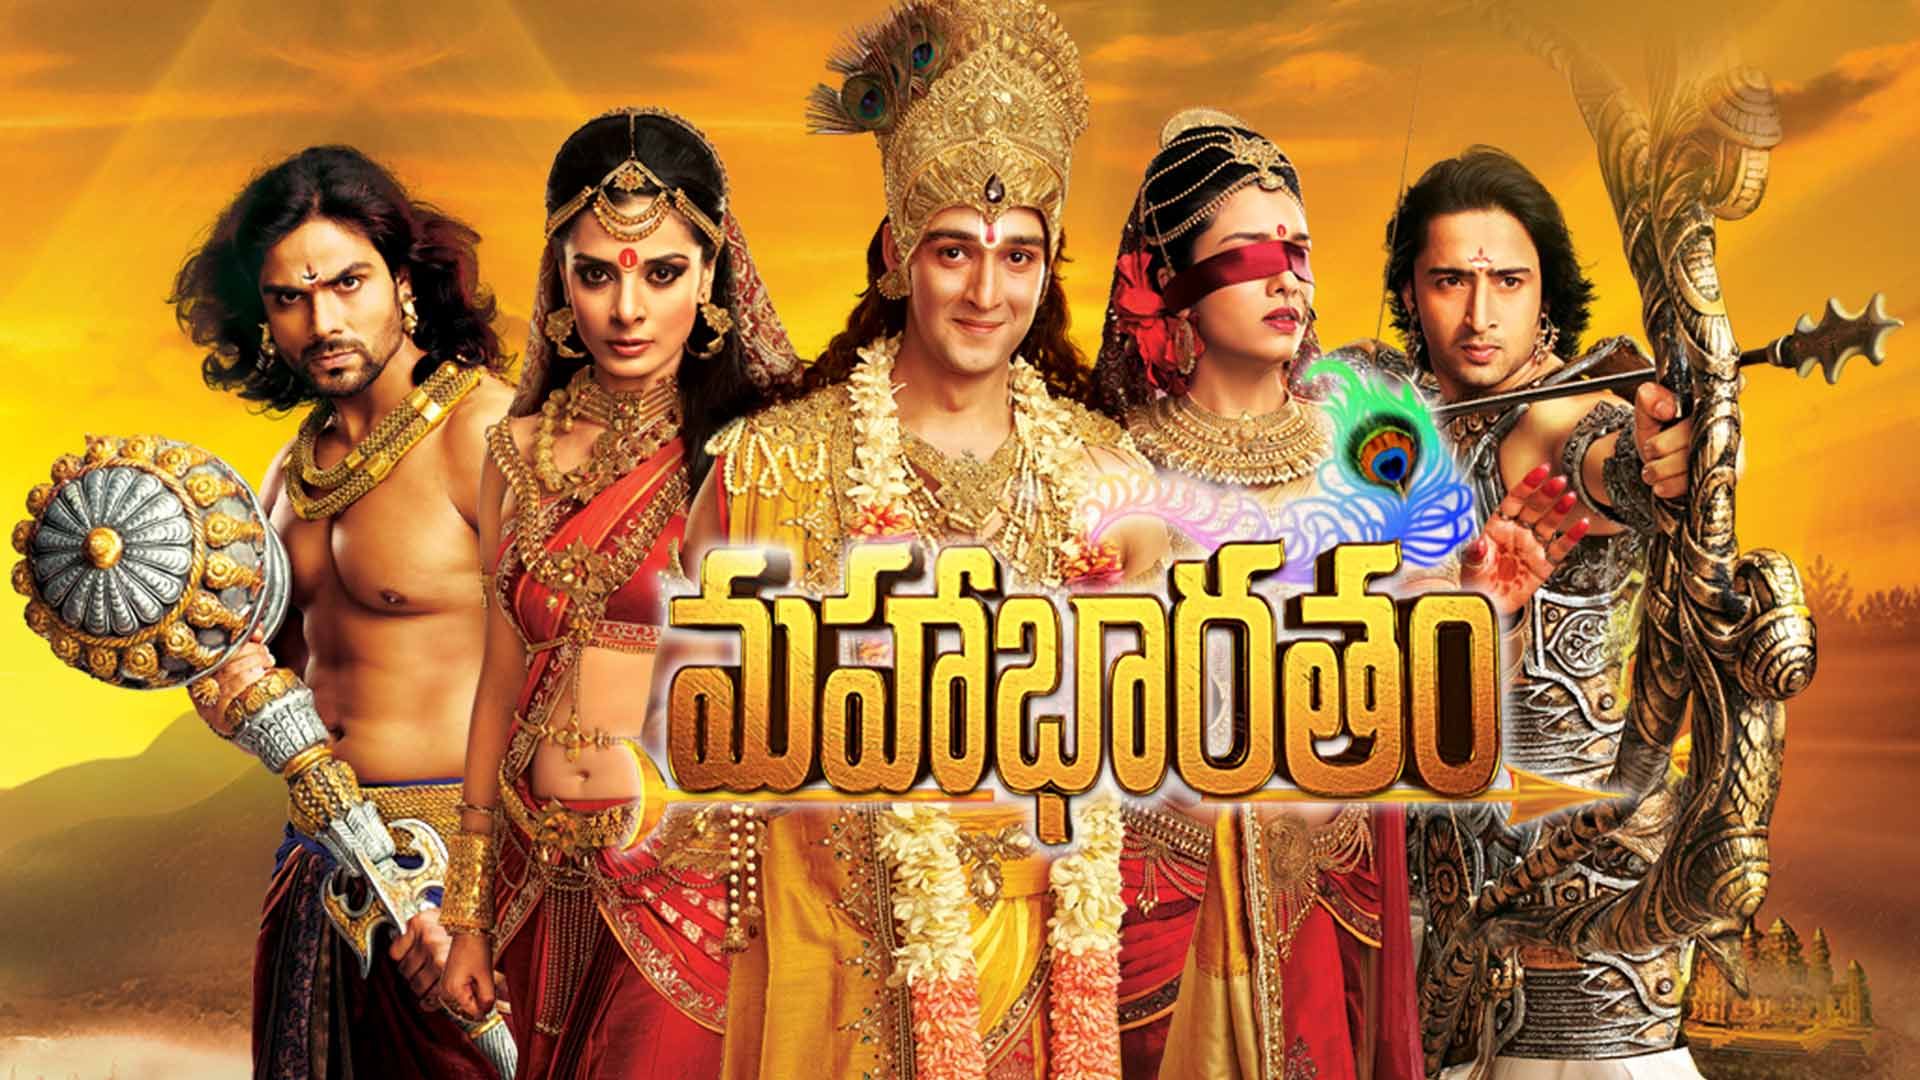 Sri bhagavatam etv serial all episodes free download 2017